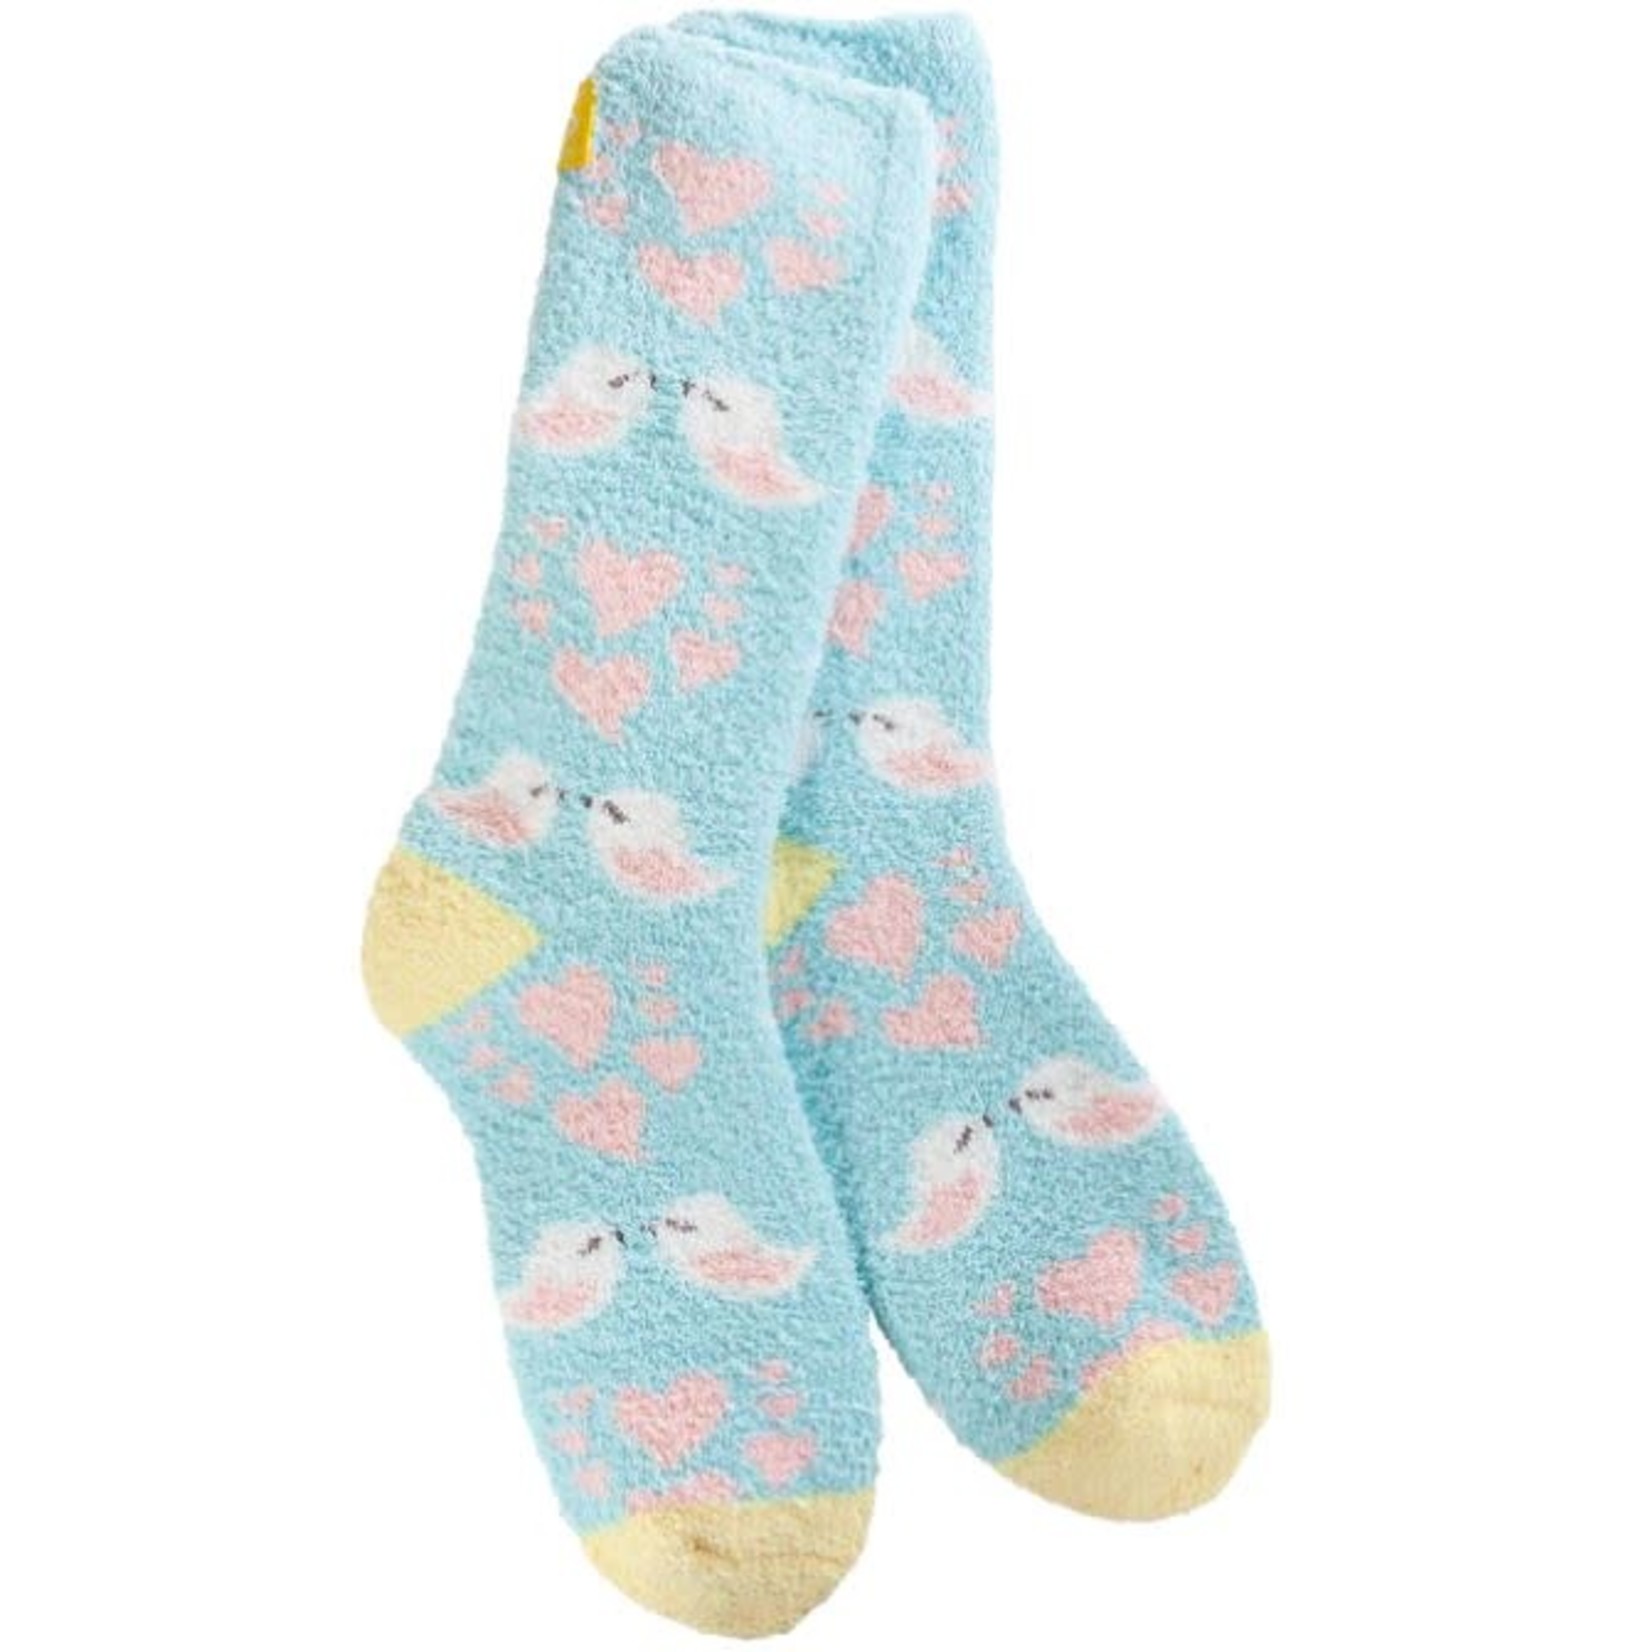 World's Softest Socks "TWEET HEARTS" COZY SOCKS